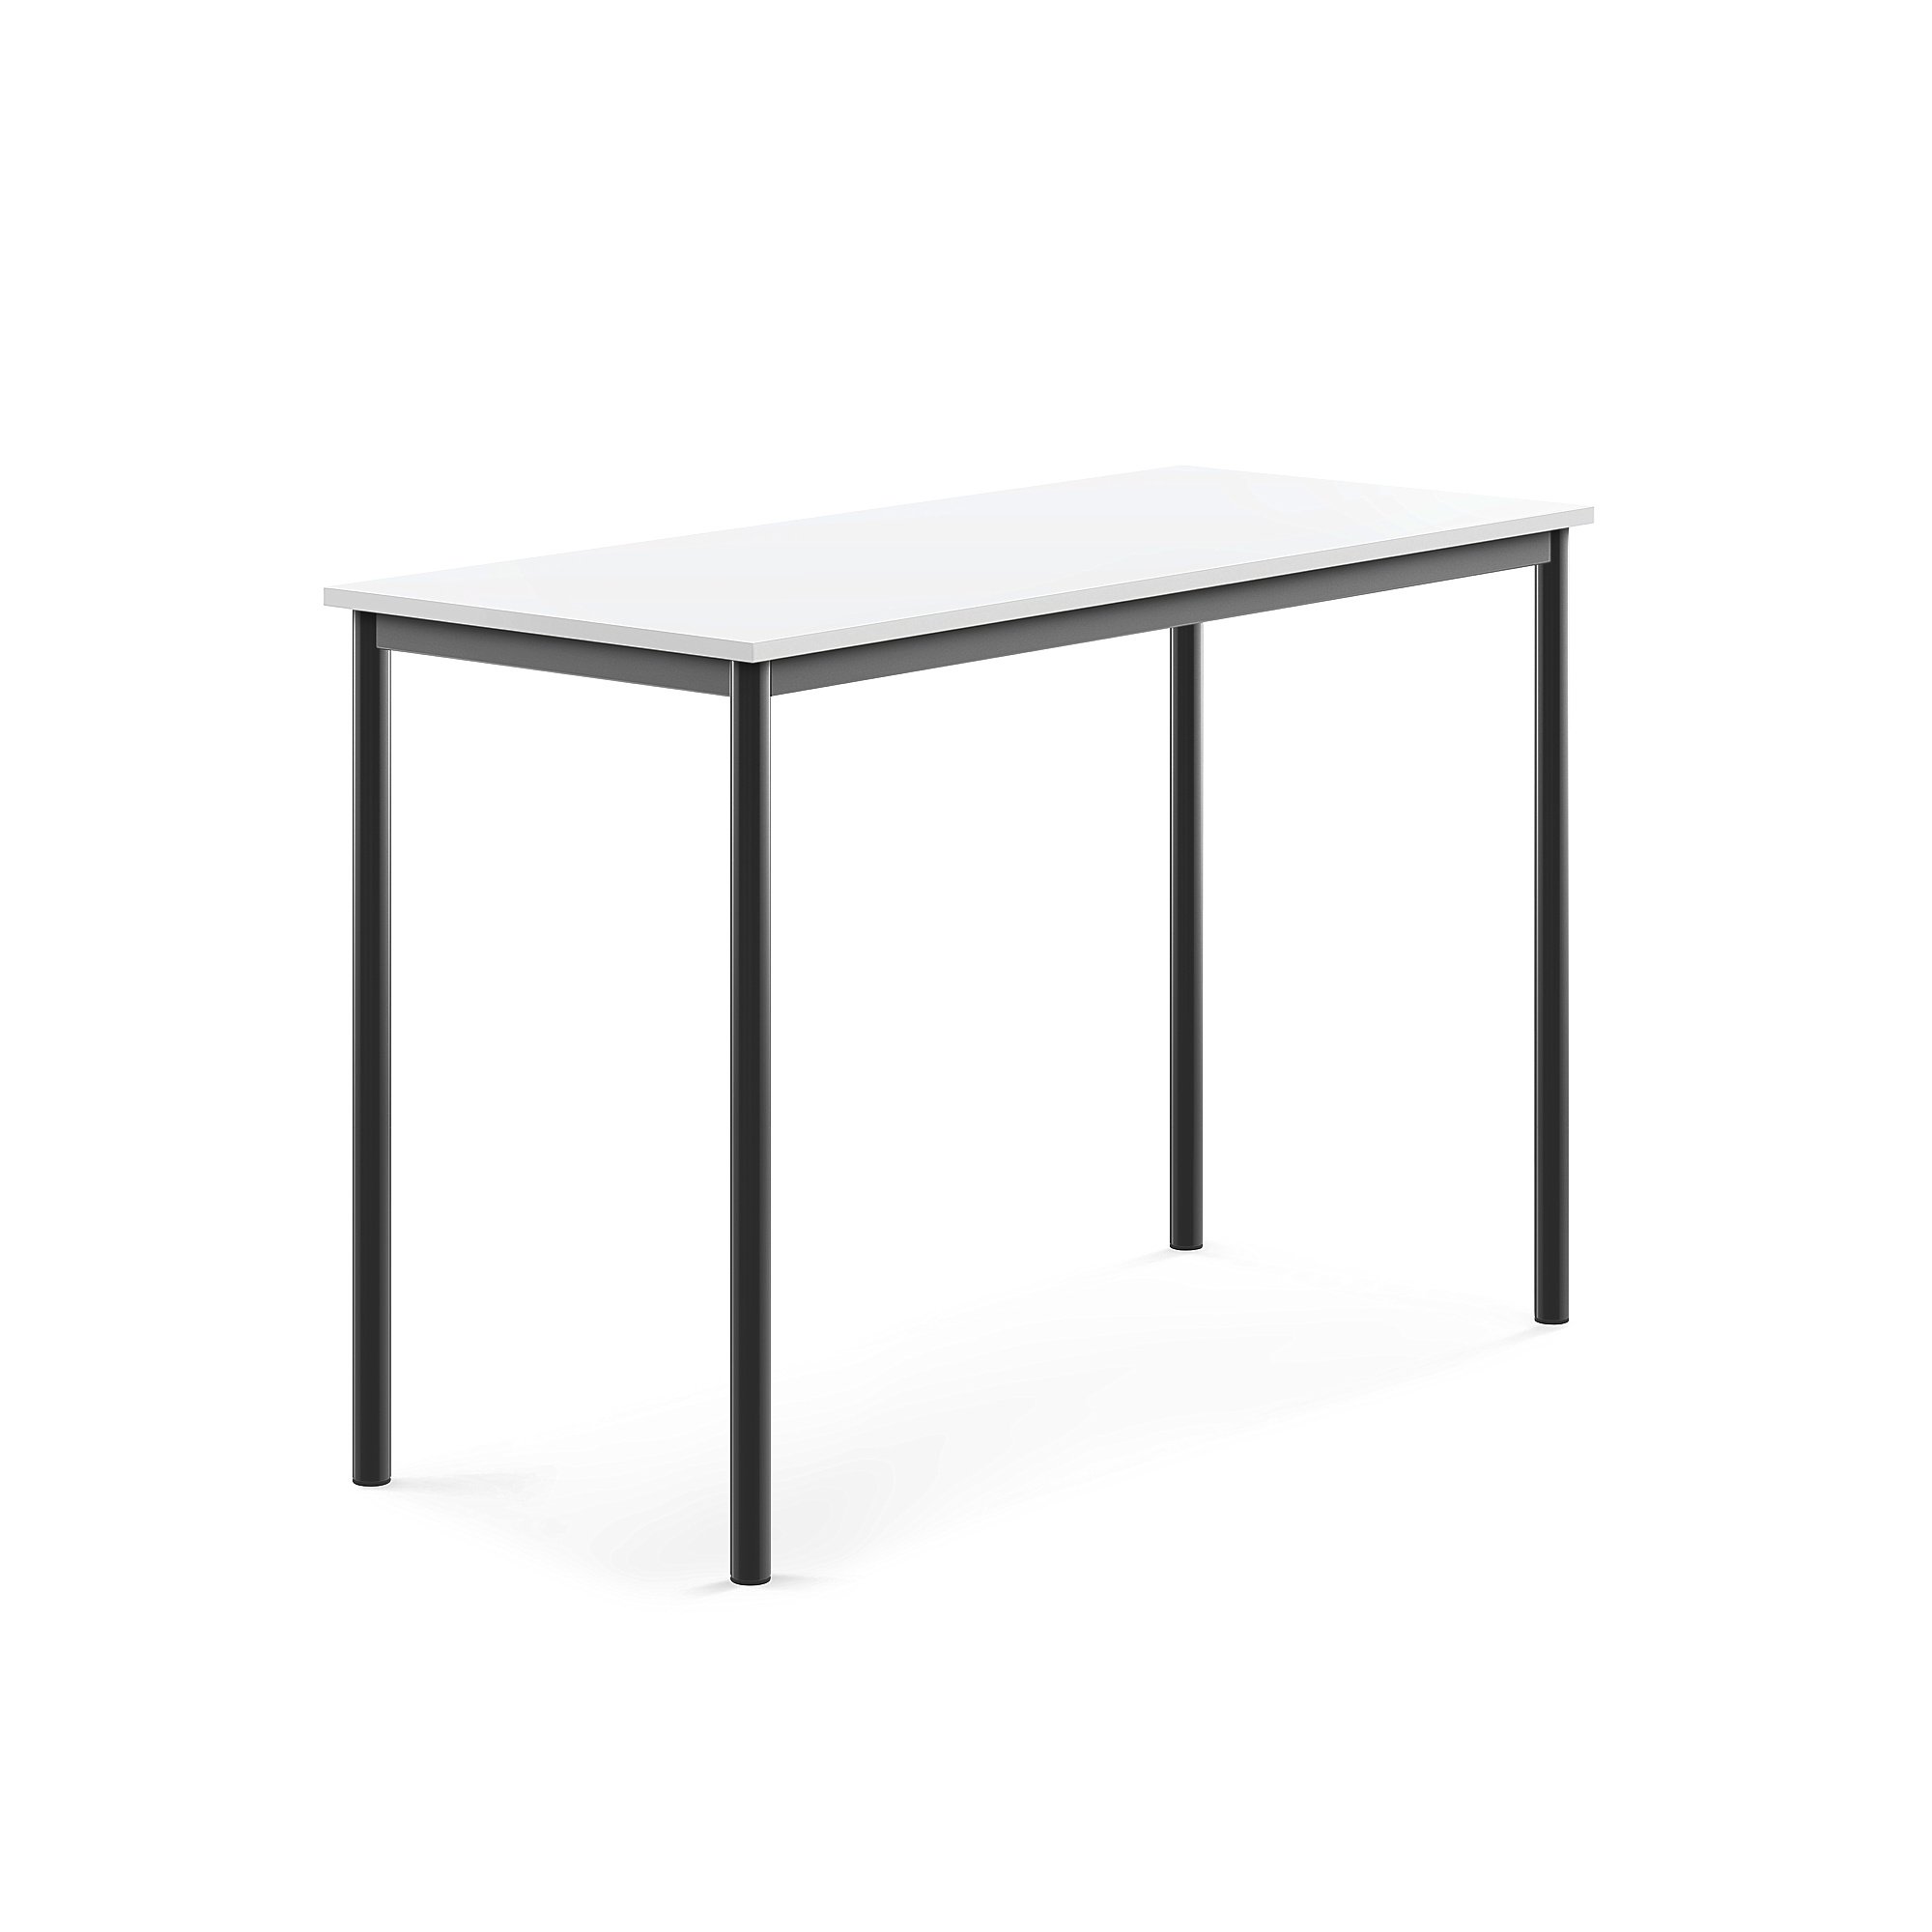 Stůl BORÅS, 1400x600x900 mm, antracitově šedé nohy, HPL deska, bílá